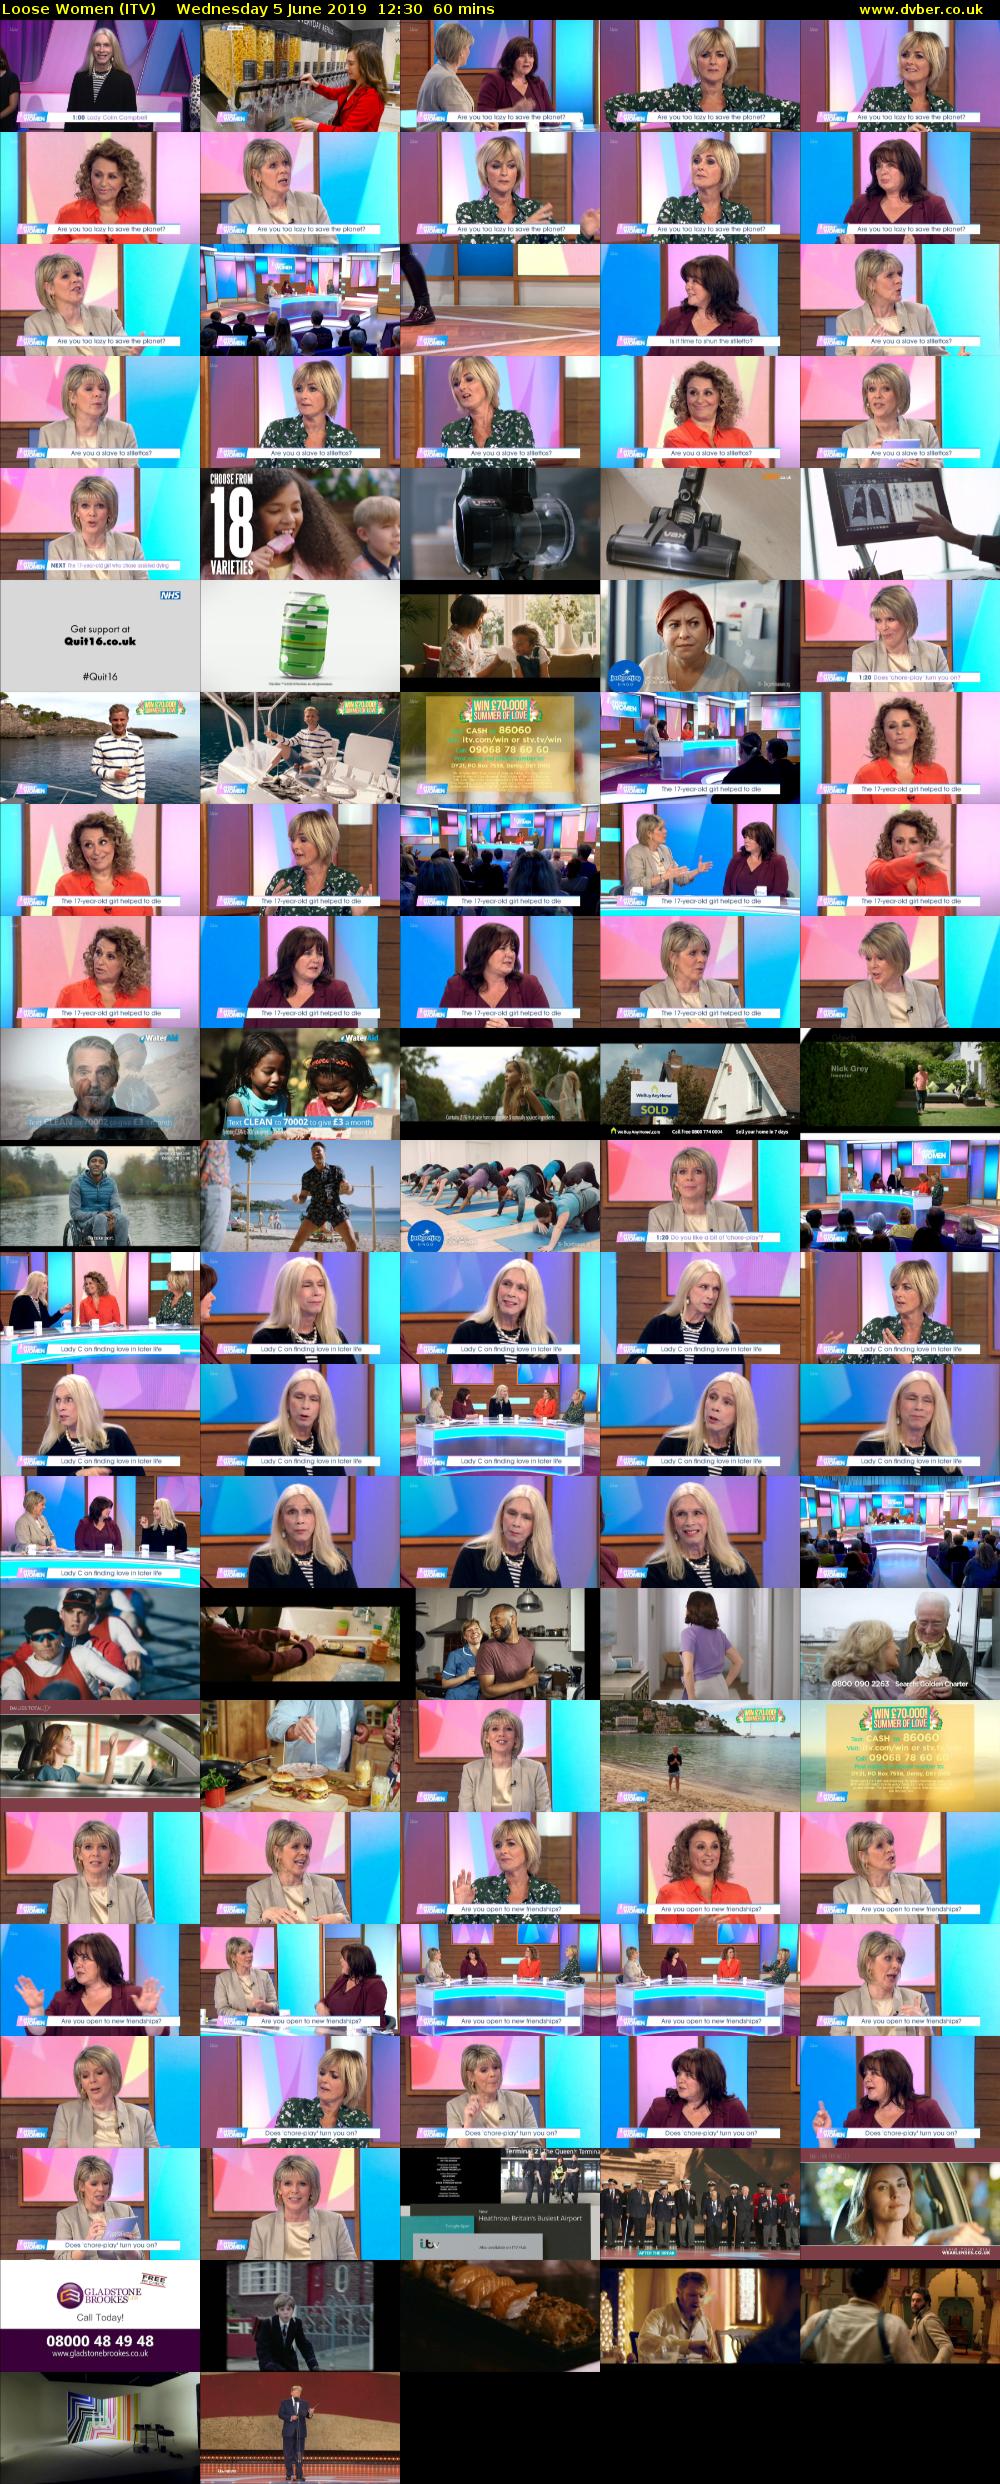 Loose Women (ITV) Wednesday 5 June 2019 12:30 - 13:30